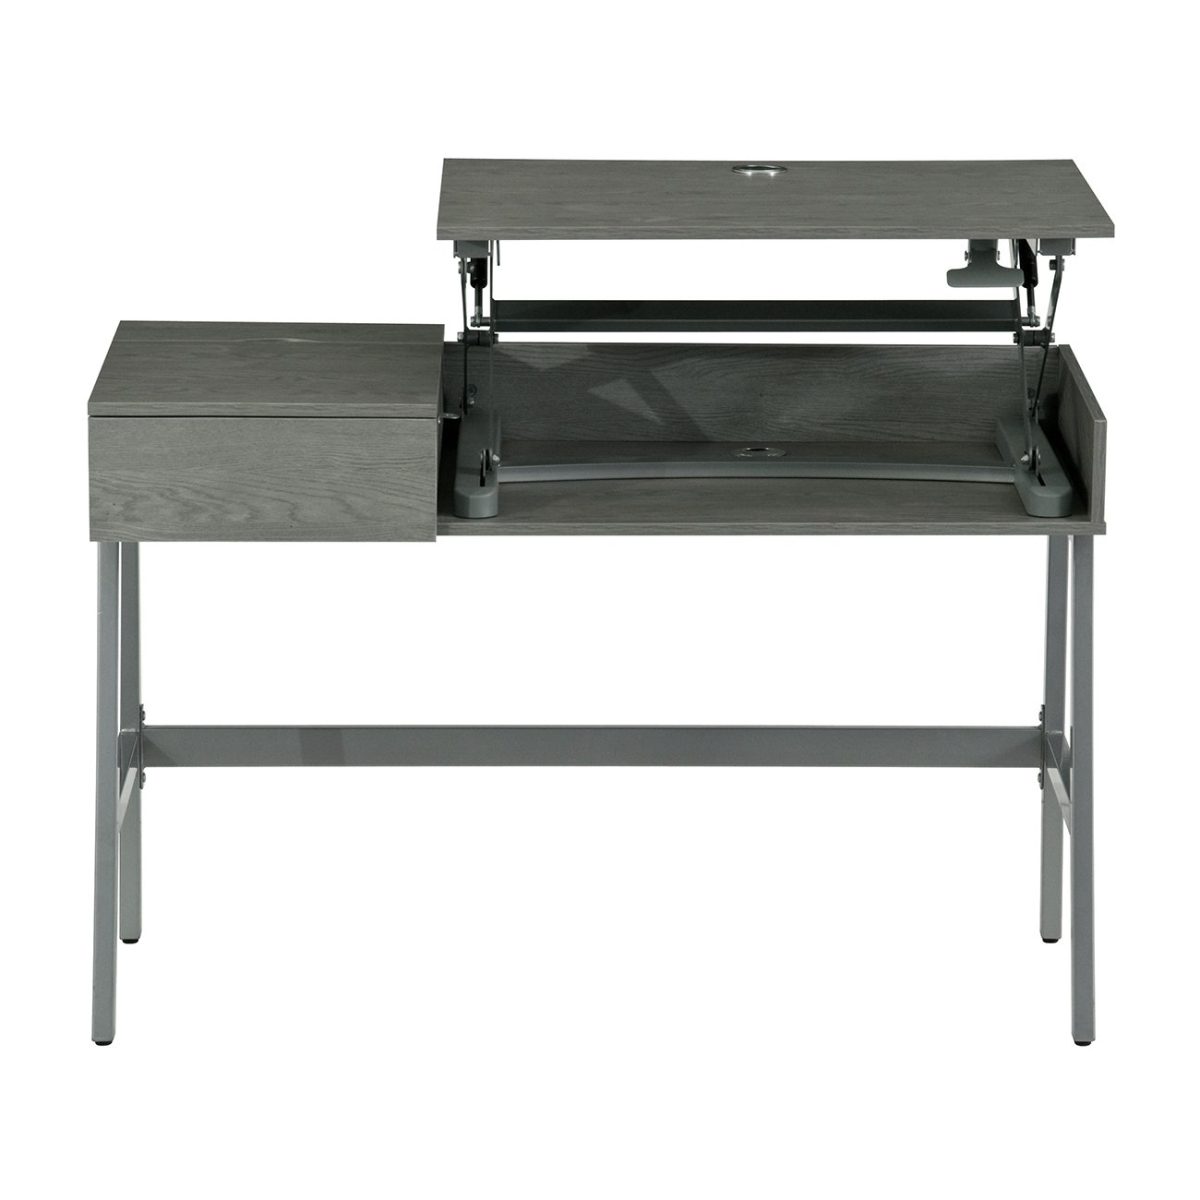 Rta-3841su-gry Pneumatic Height Adjustable Standing Desk, Grey